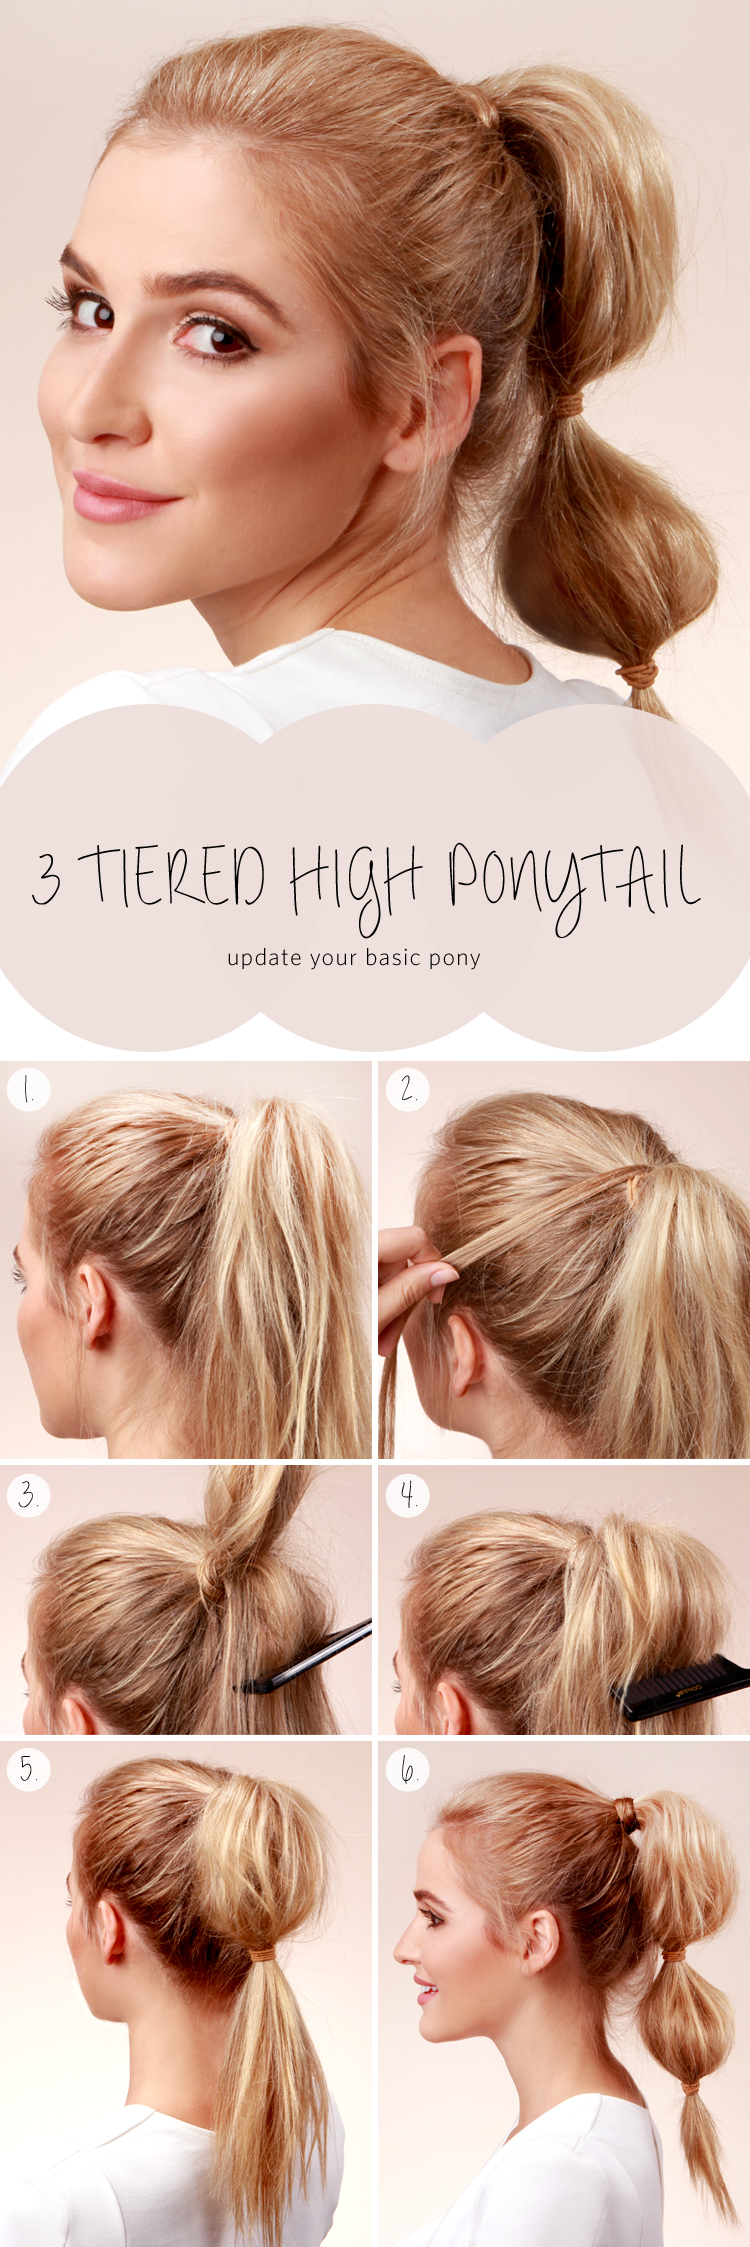 Nice ponytail hairstyle tutorial